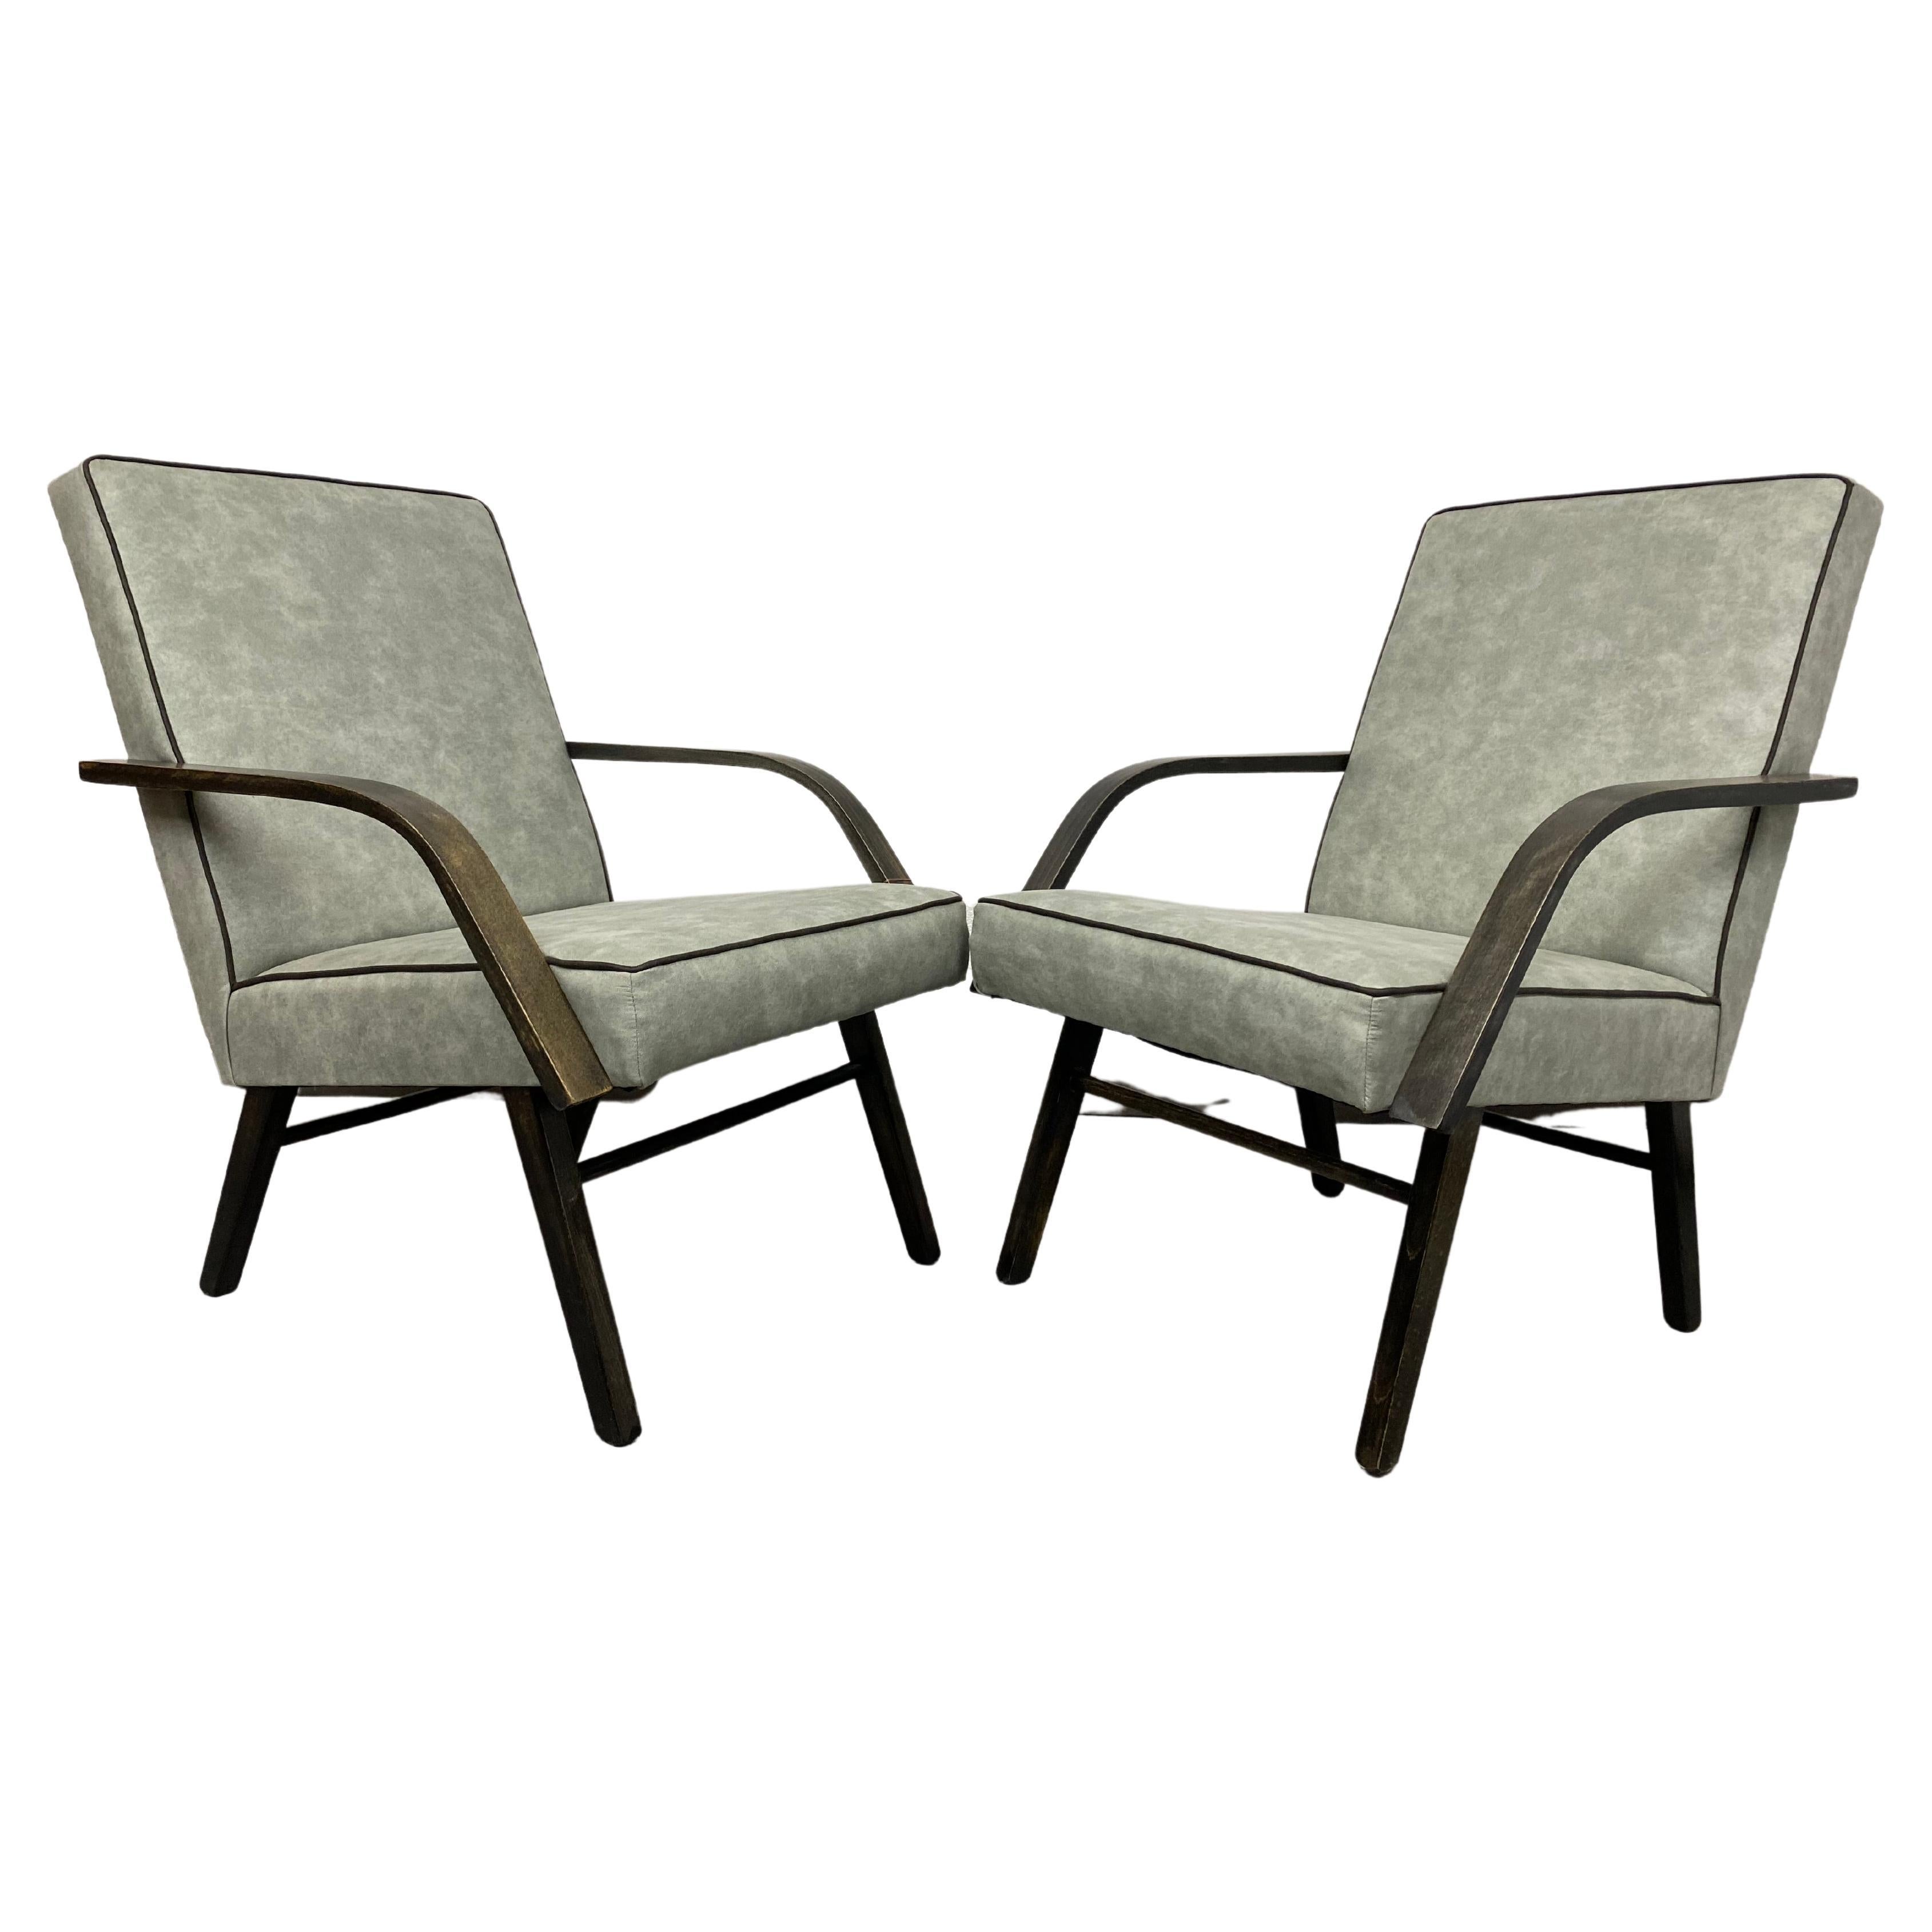 Slovak Lounge Chairs